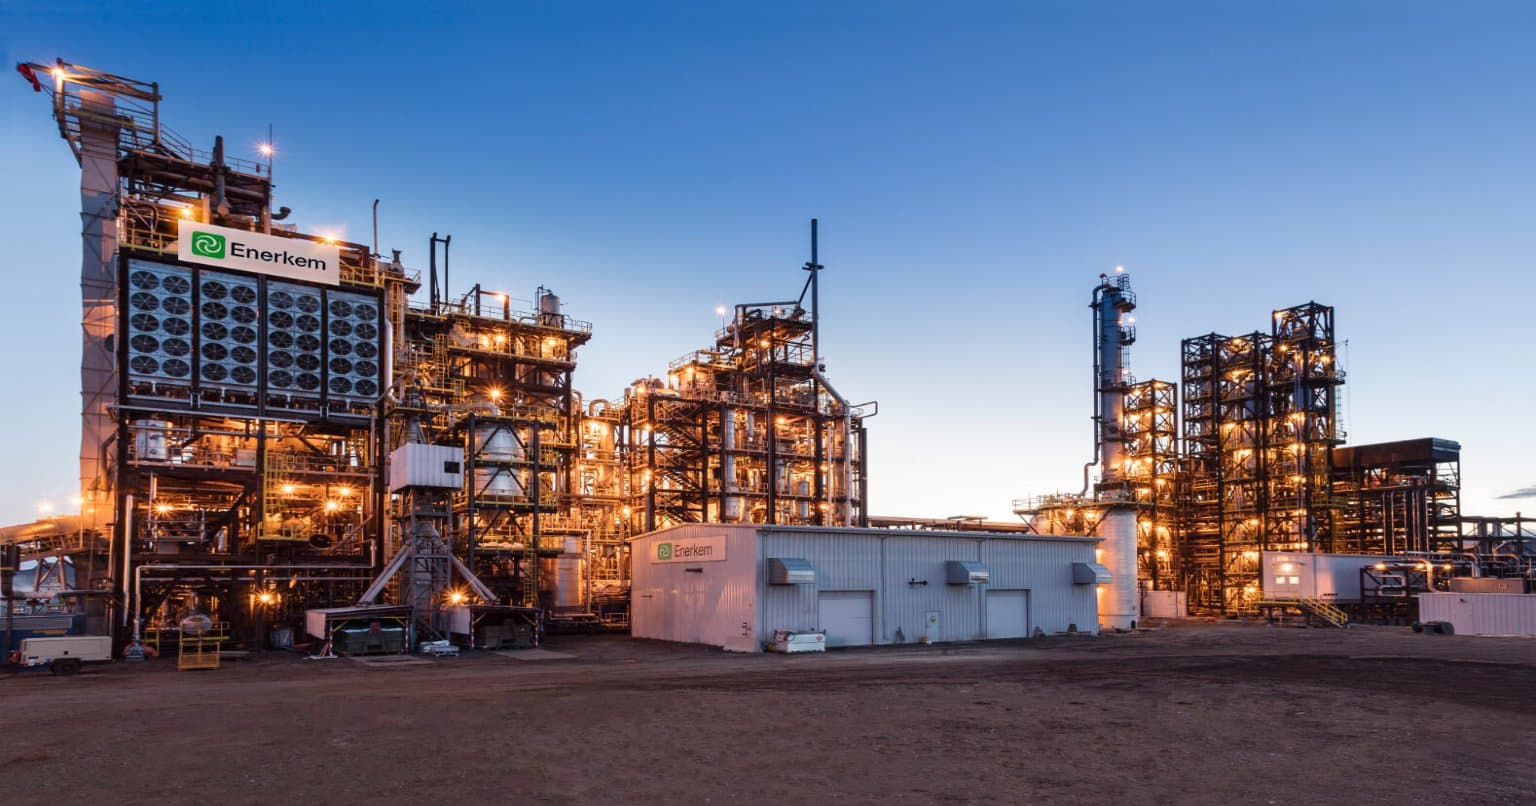 Enerkem's full-scale waste-to-biofuels facility in Edmonton, Alberta